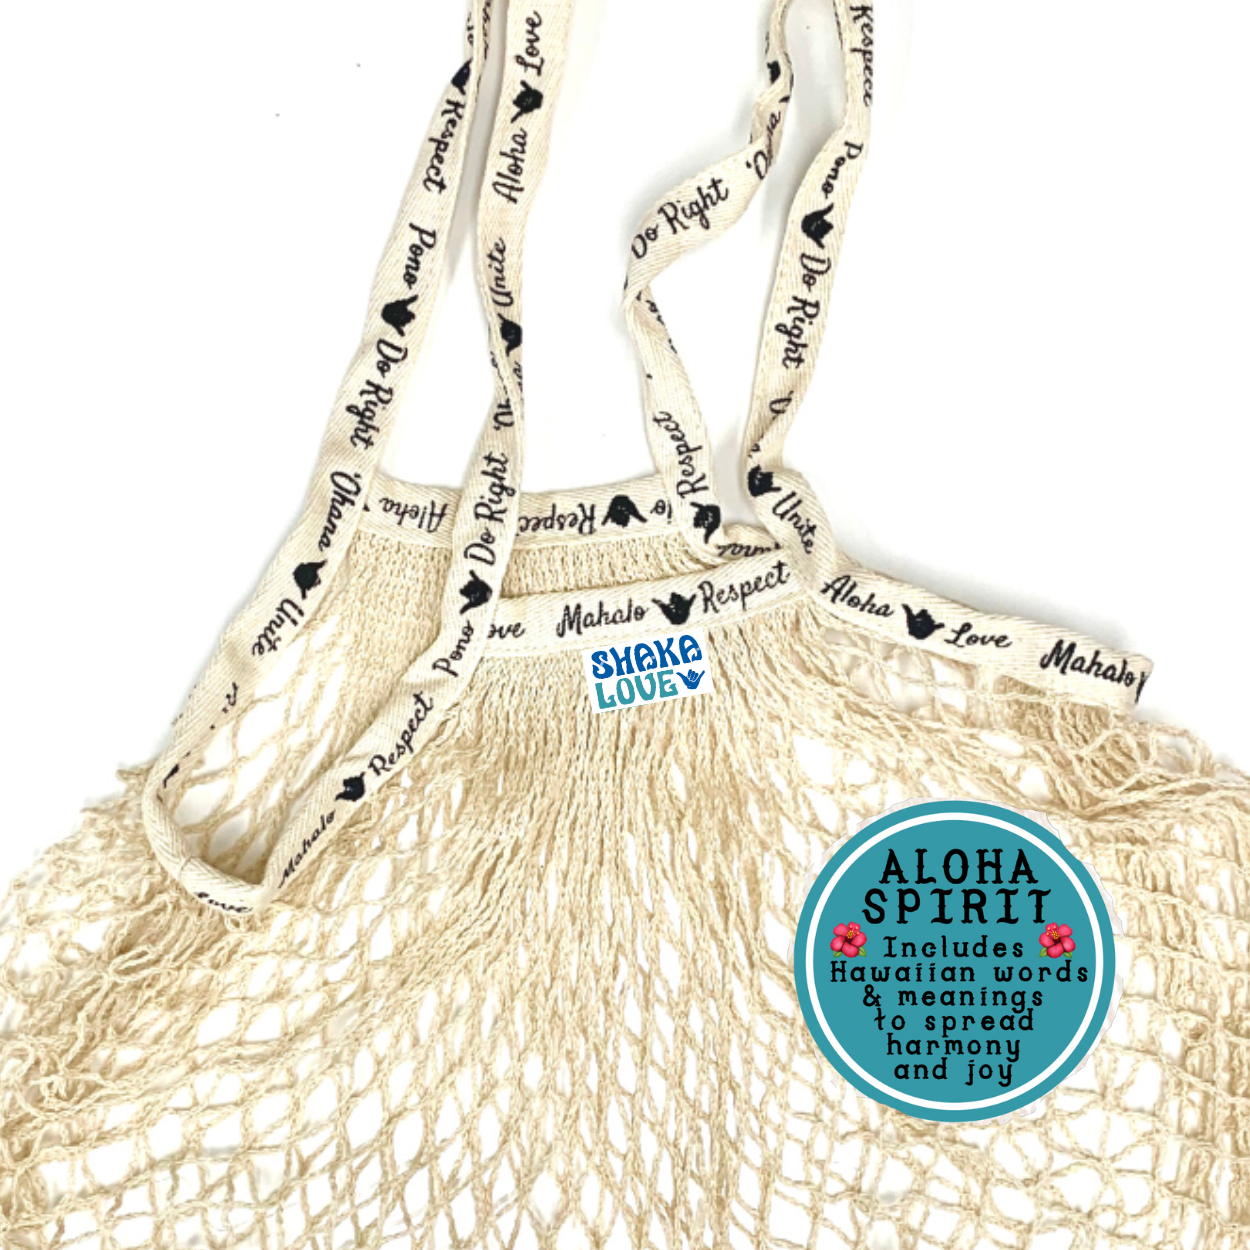 Buy SHAKA Lady's Luxe Olive Handbag online